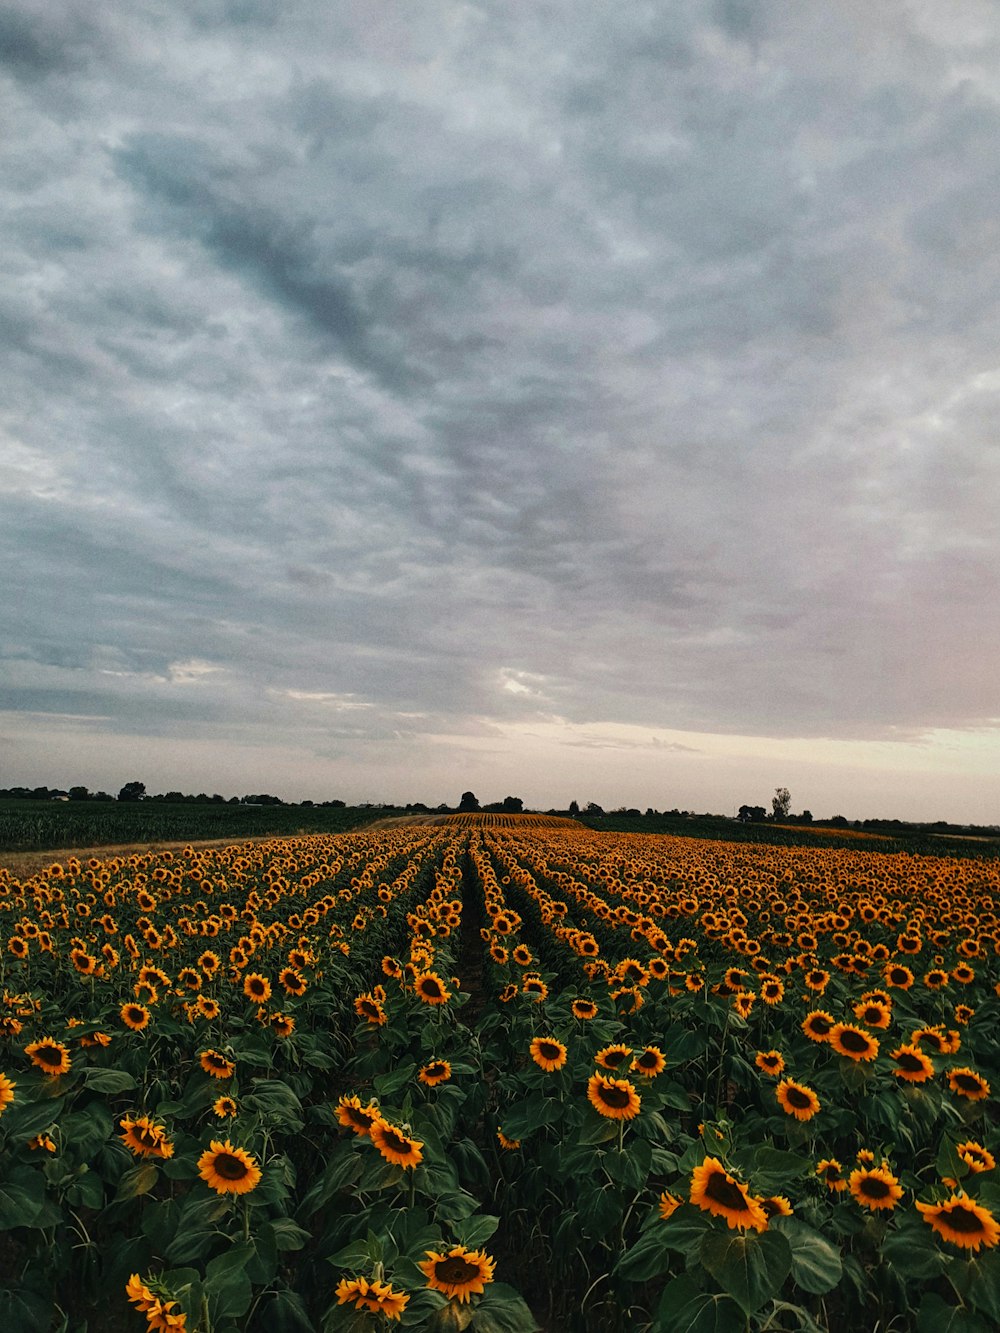 sunflower field under cloudy sky during daytime